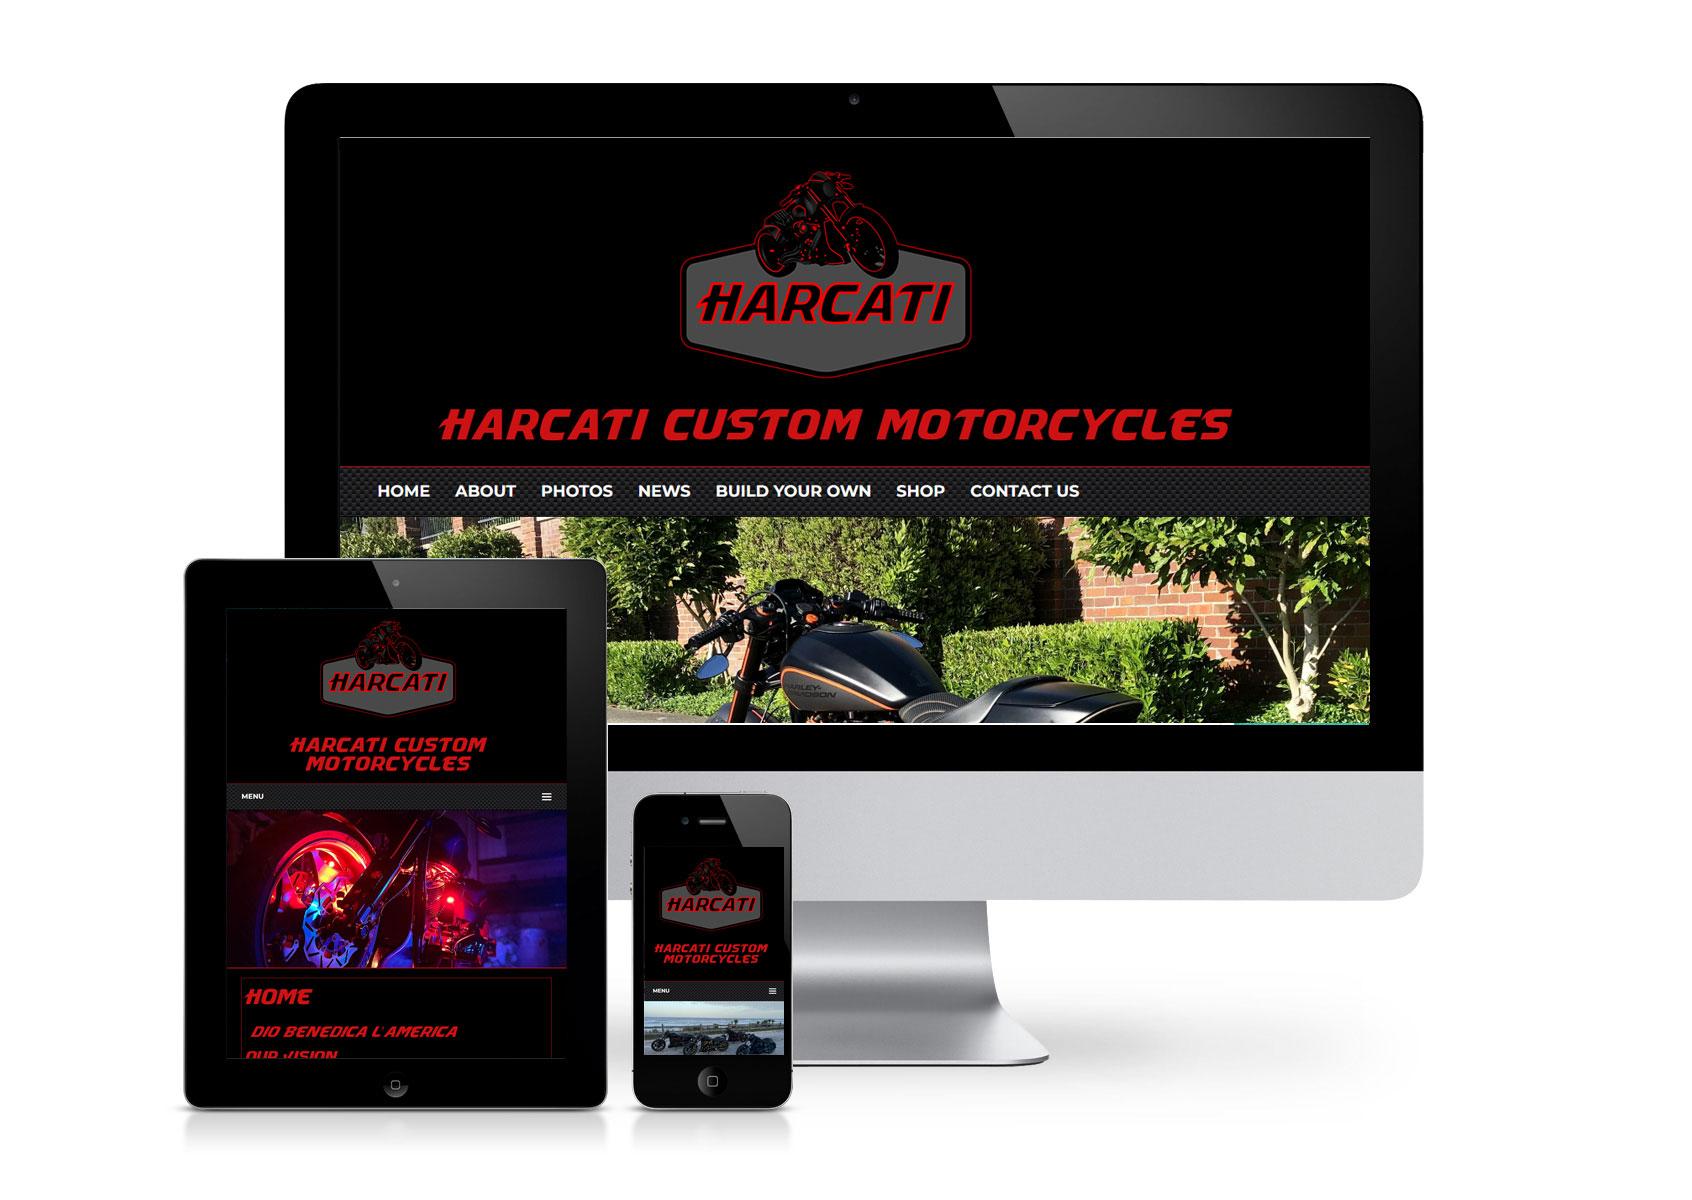 Harcati Custom Motorcycles website created by Graeme Hunt Design